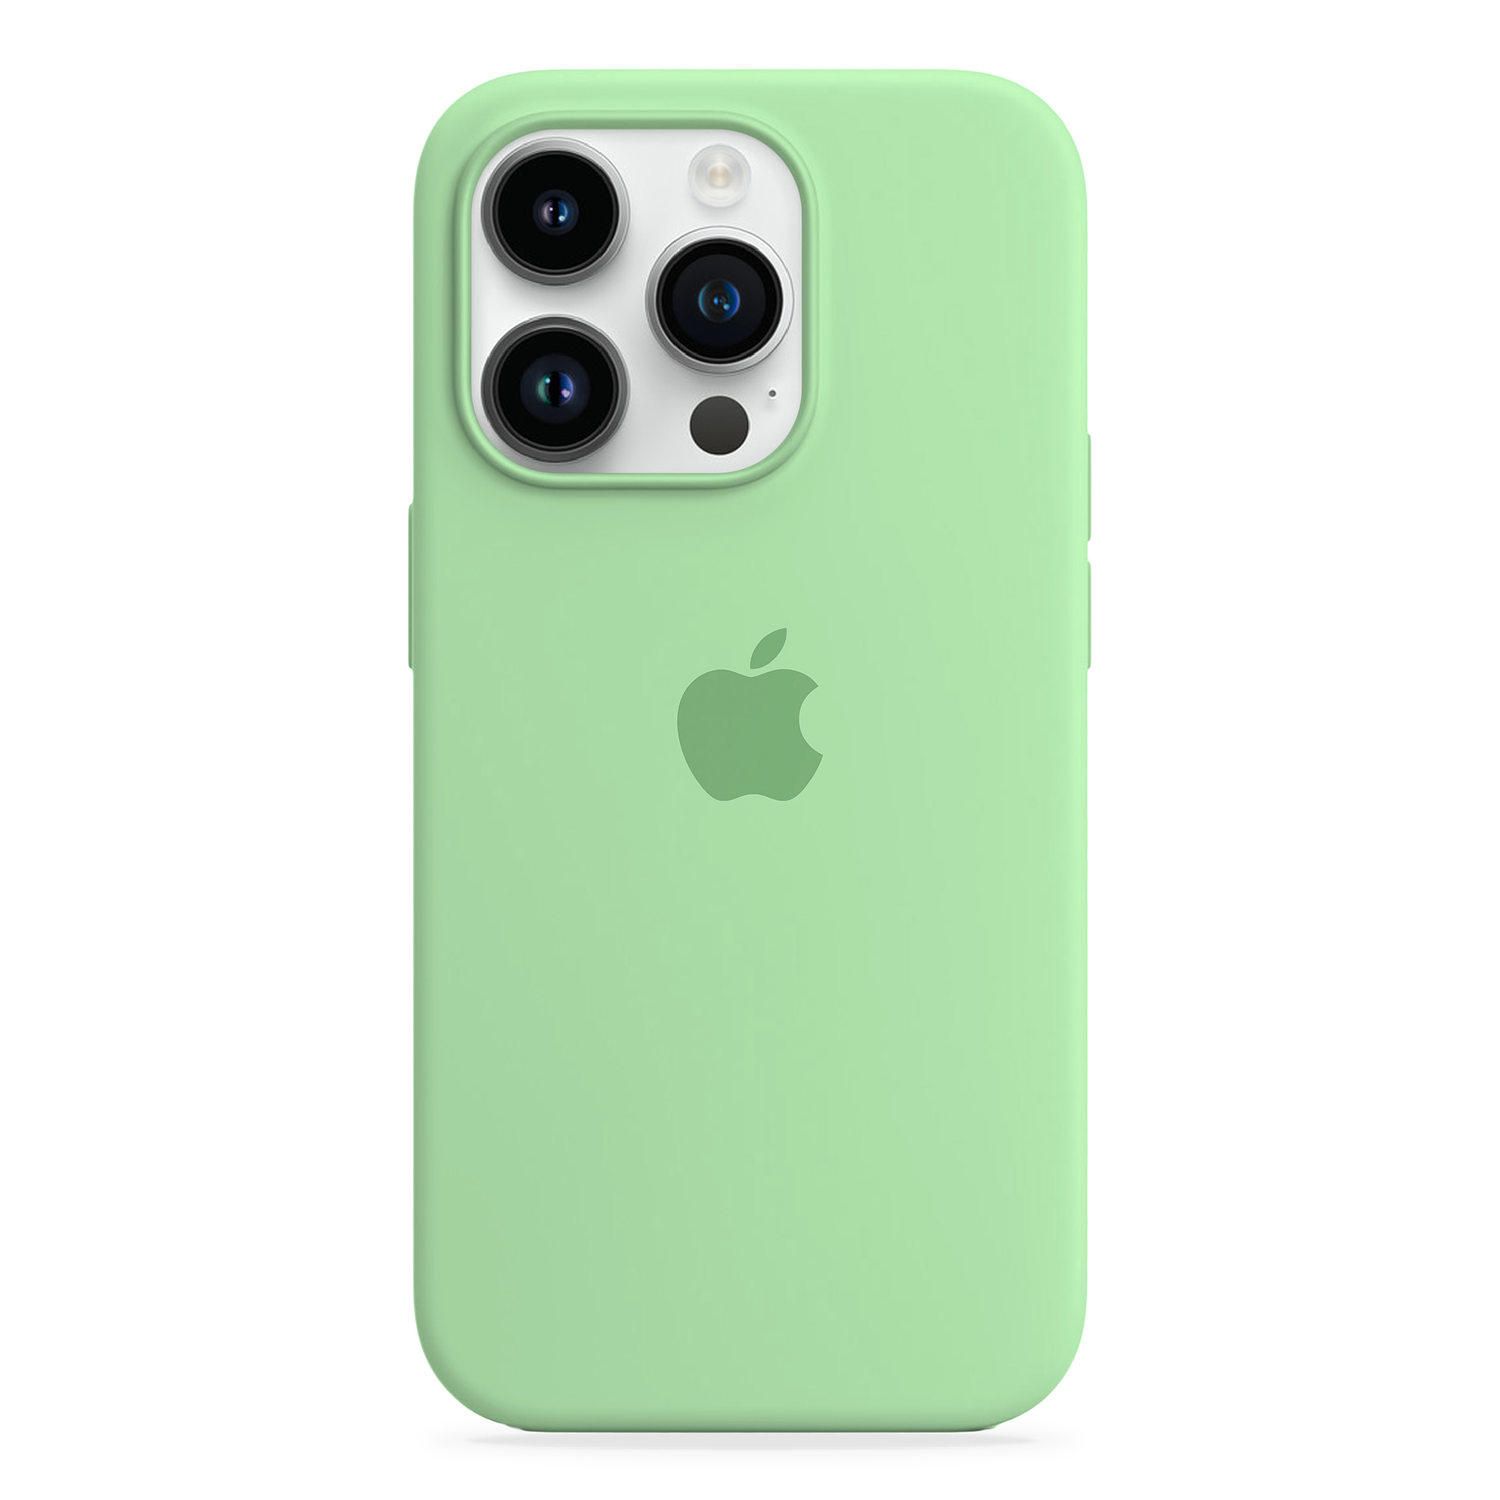 Compra Apple Carcasa original silicona iPhone 8